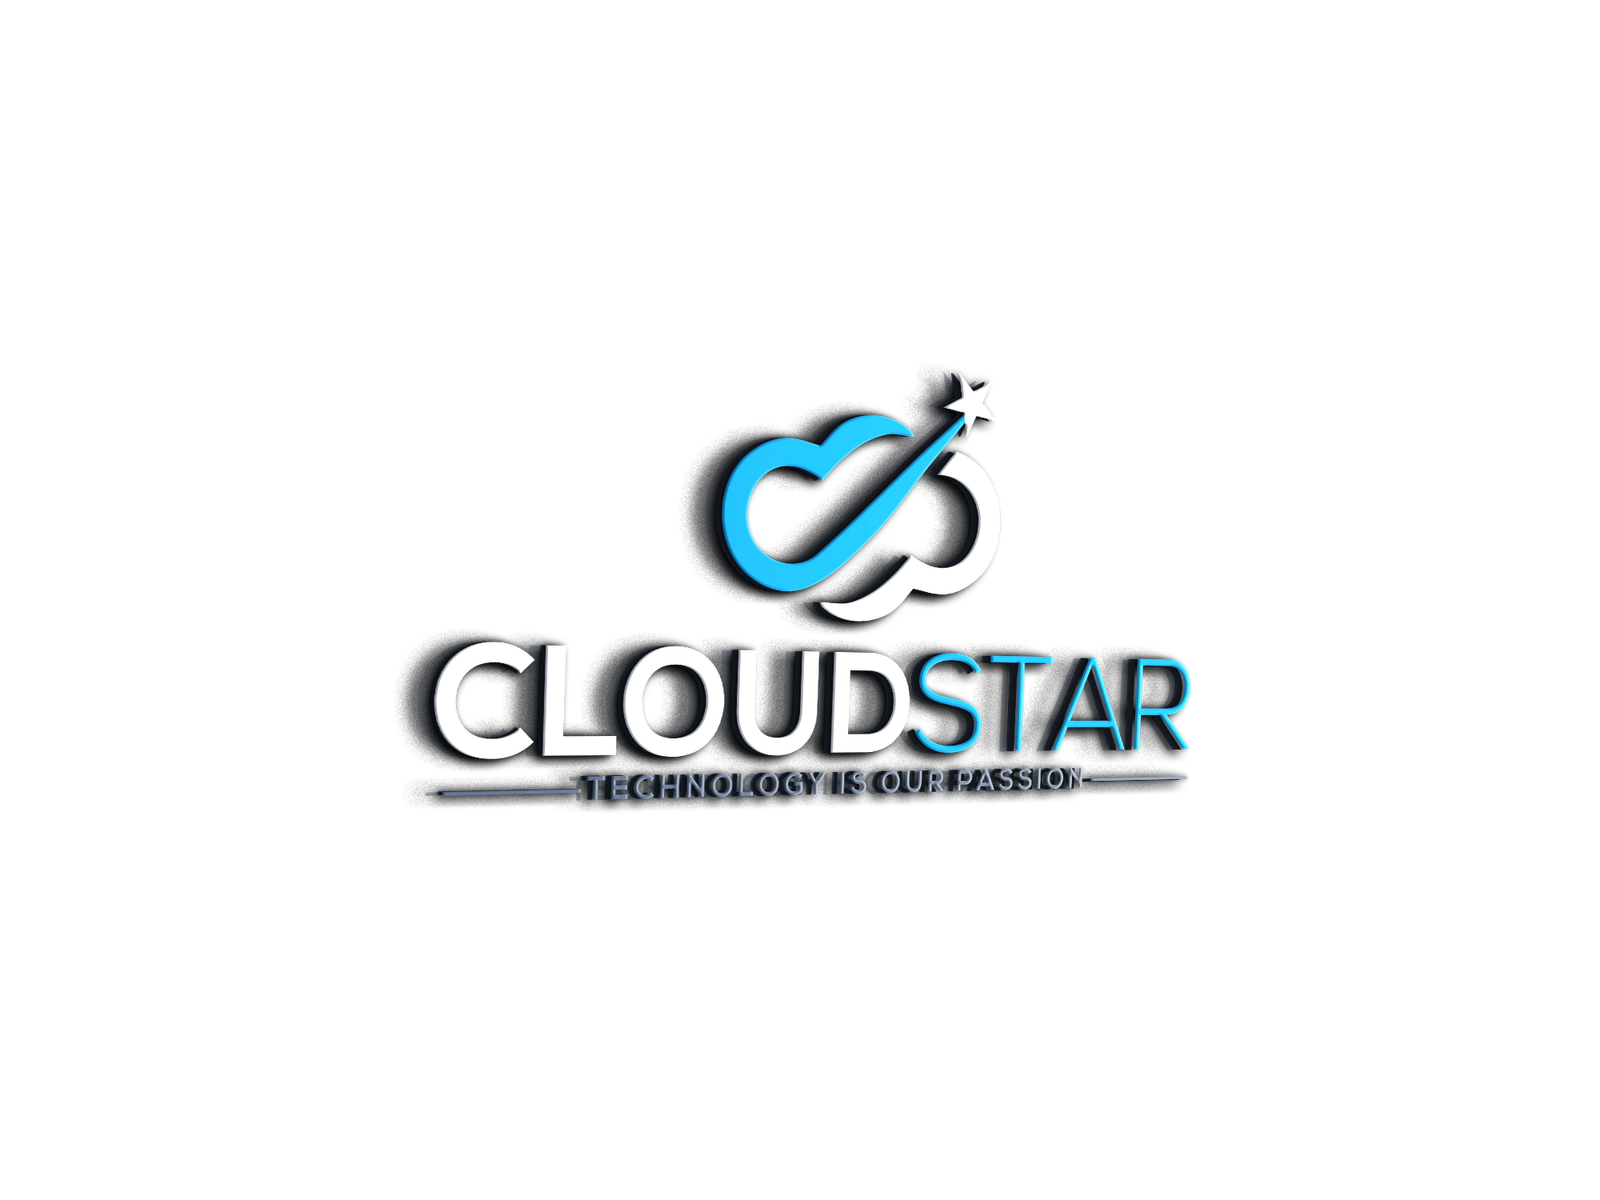 CloudStar